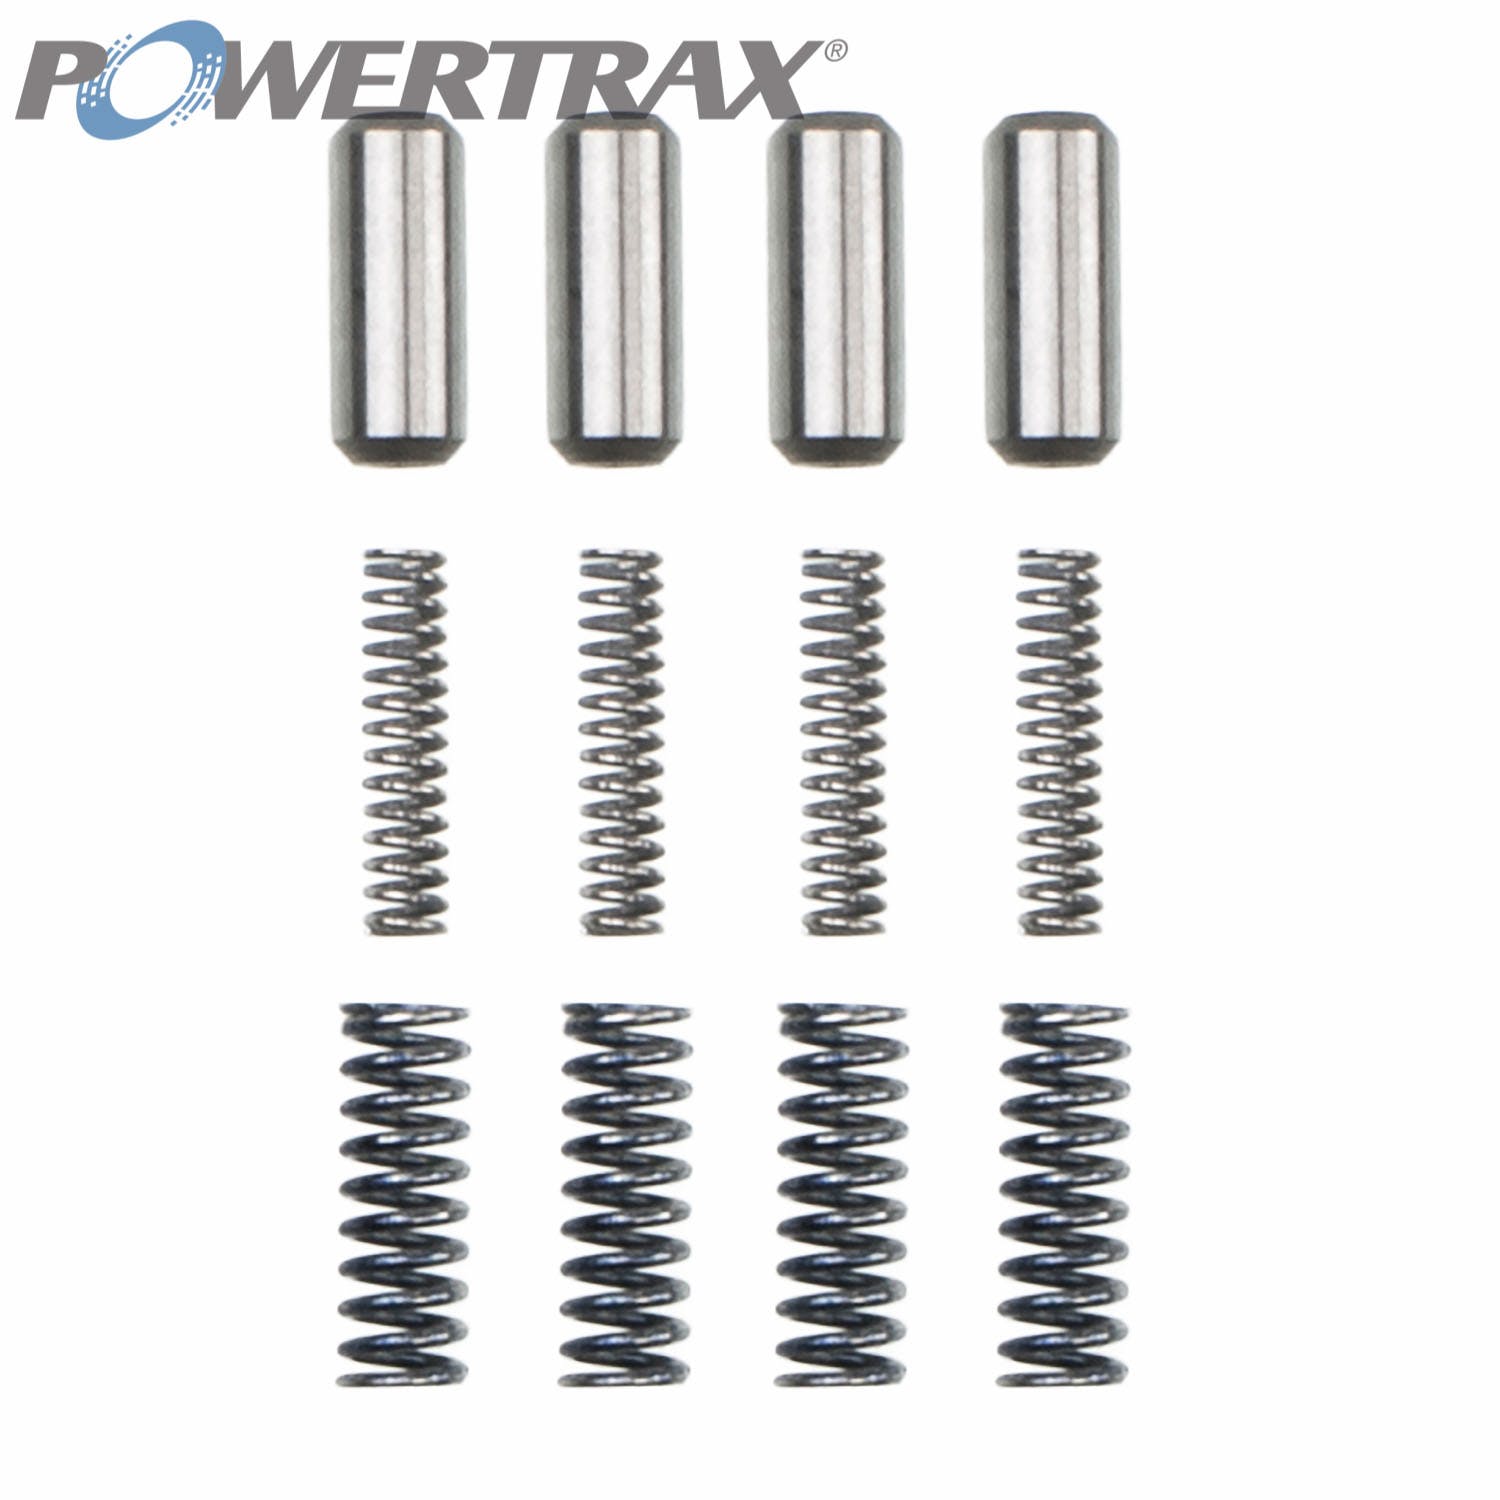 PowerTrax 1025350KAP Spring And Pin Kit